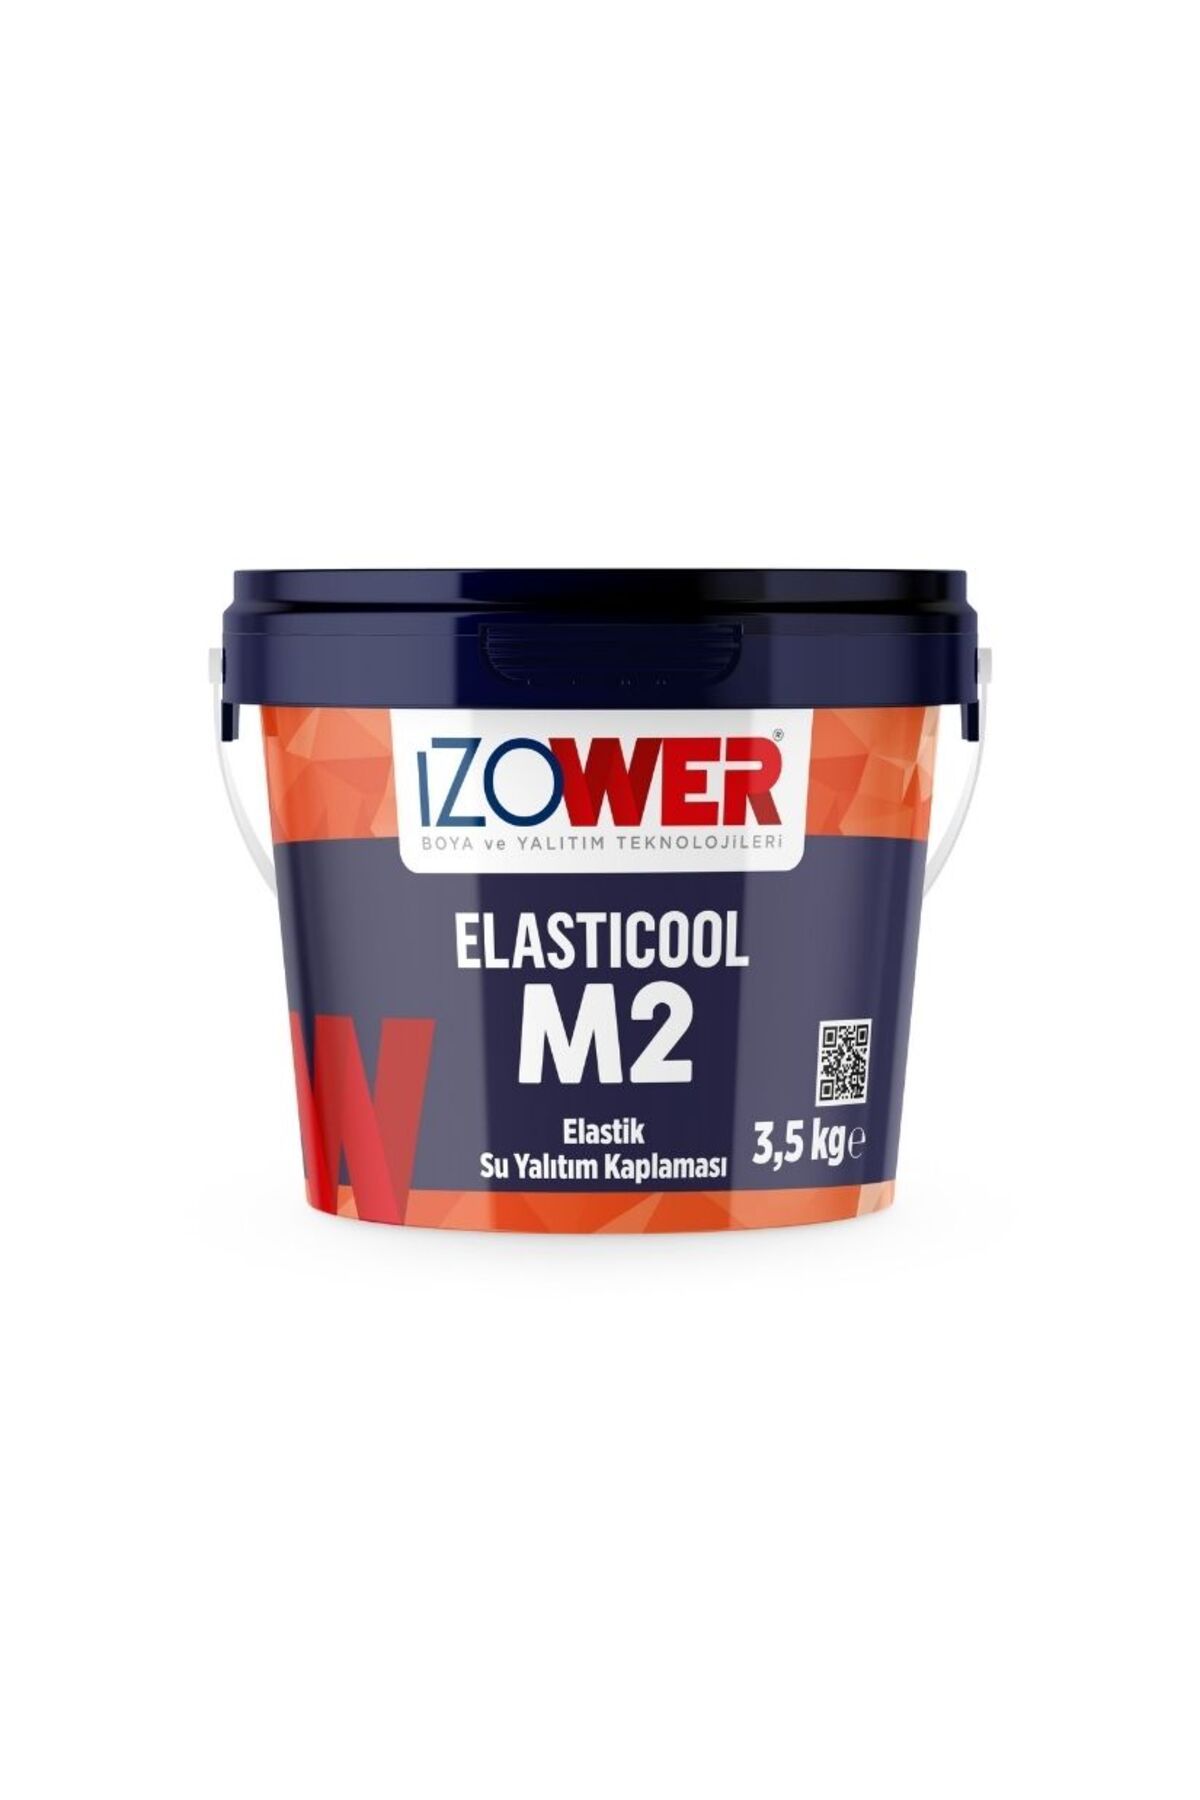 izower M2 Elastik Su Yalıtım Kaplaması- Kiremit Rengi- 3.5 Kg